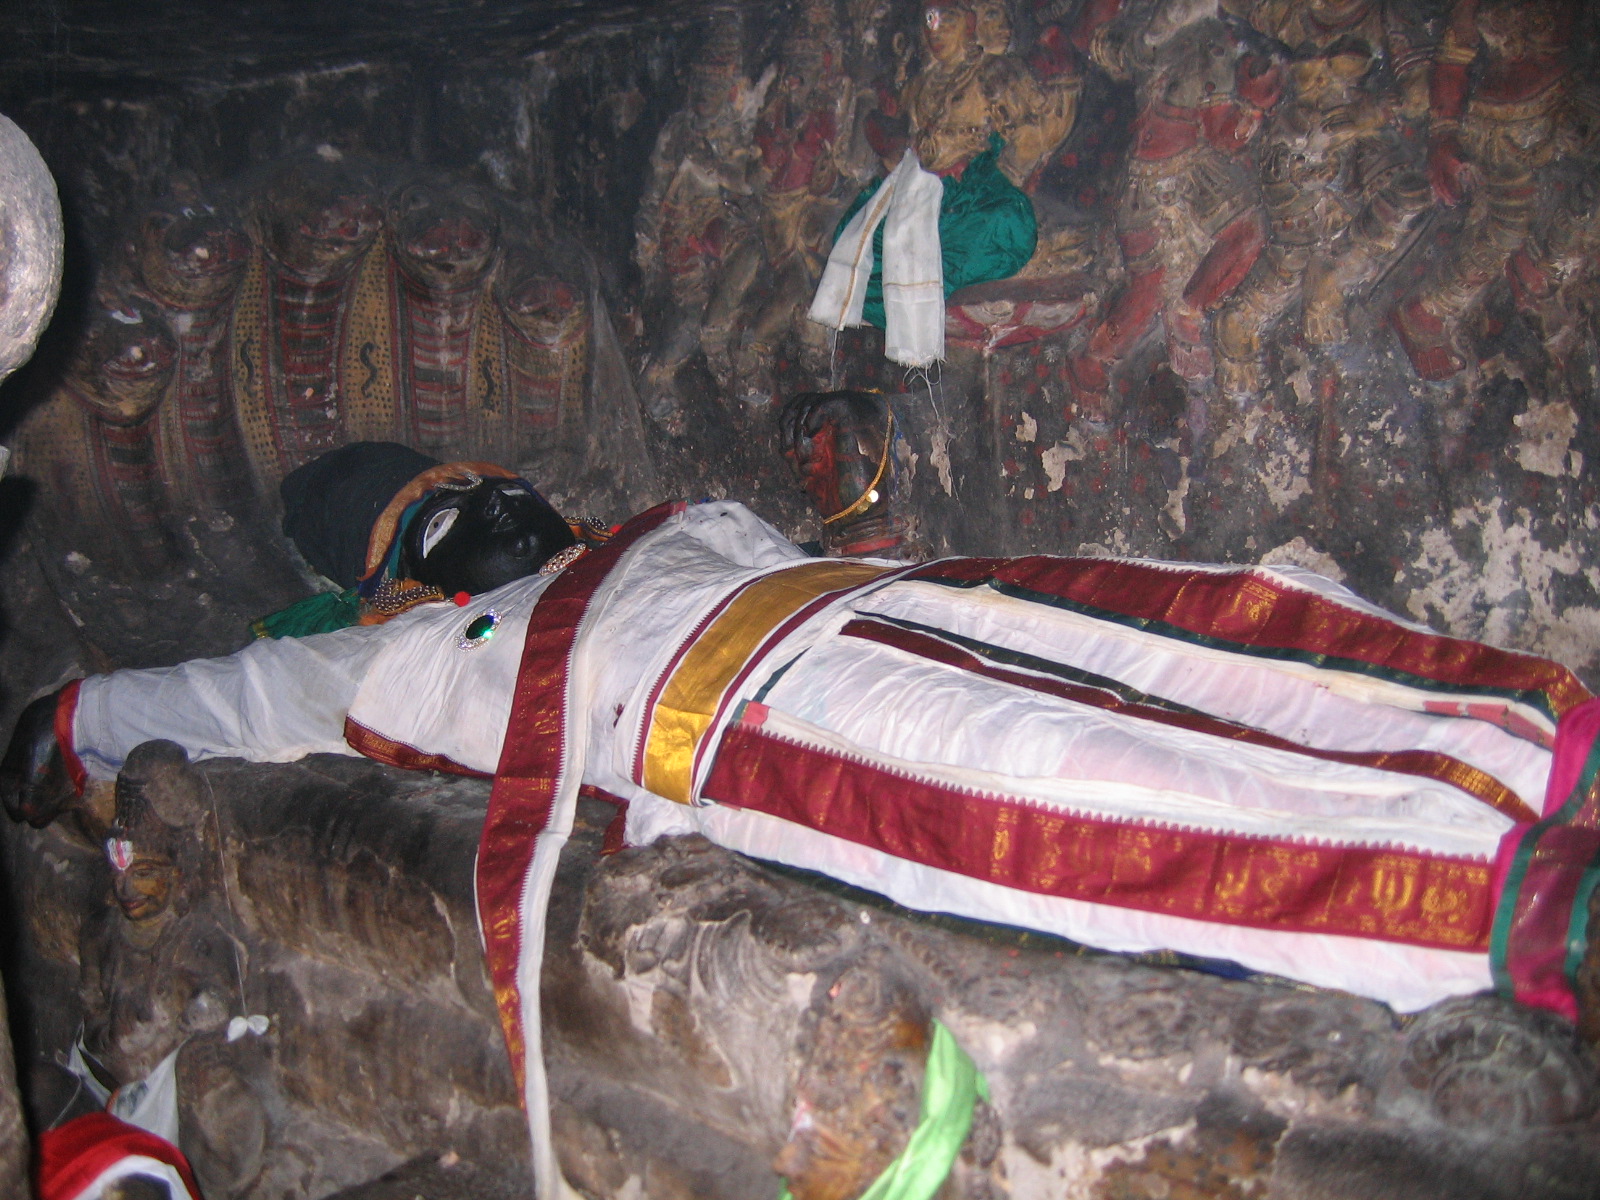 Thirukadalmalai Sthalasayana Vishnu Temple